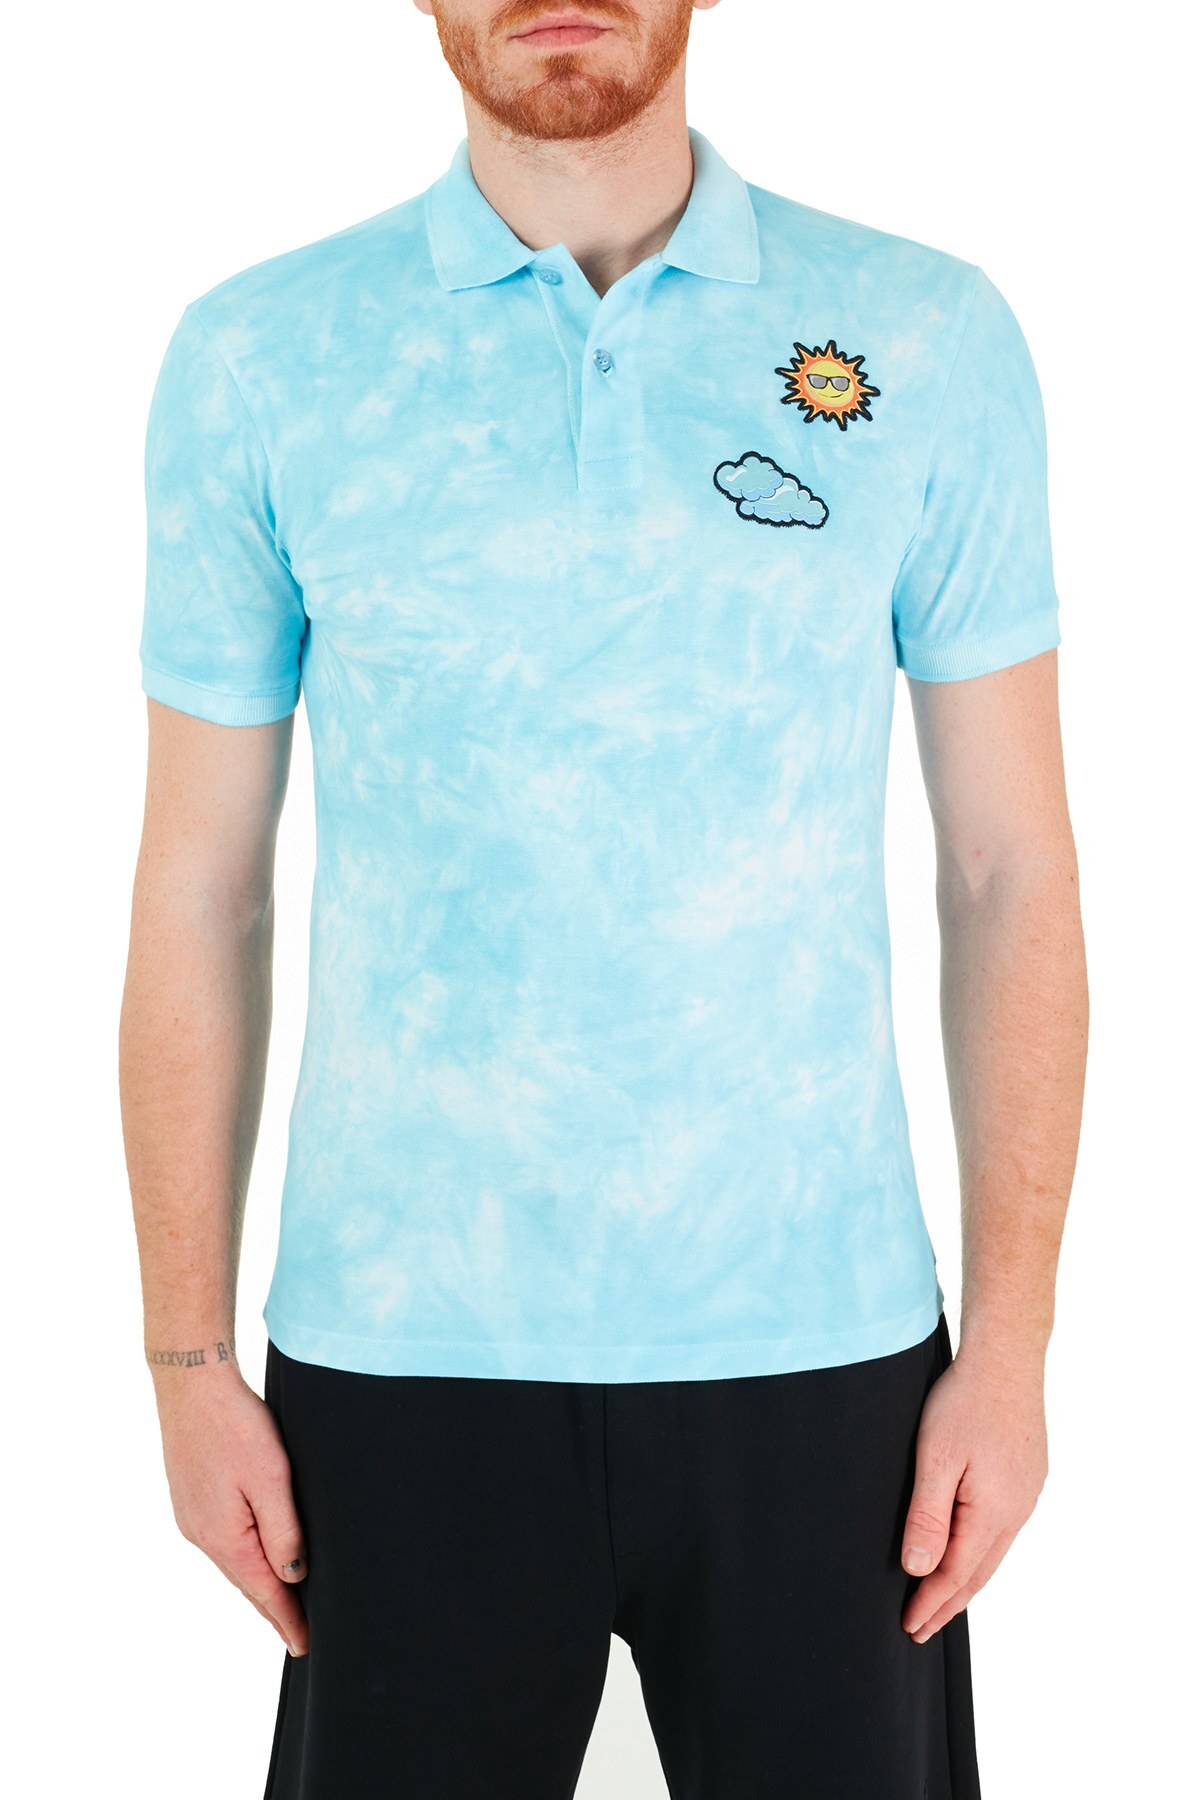 Ruck Maul Pamuklu Düğmeli T Shirt Erkek Polo RMM01000725 MAVİ